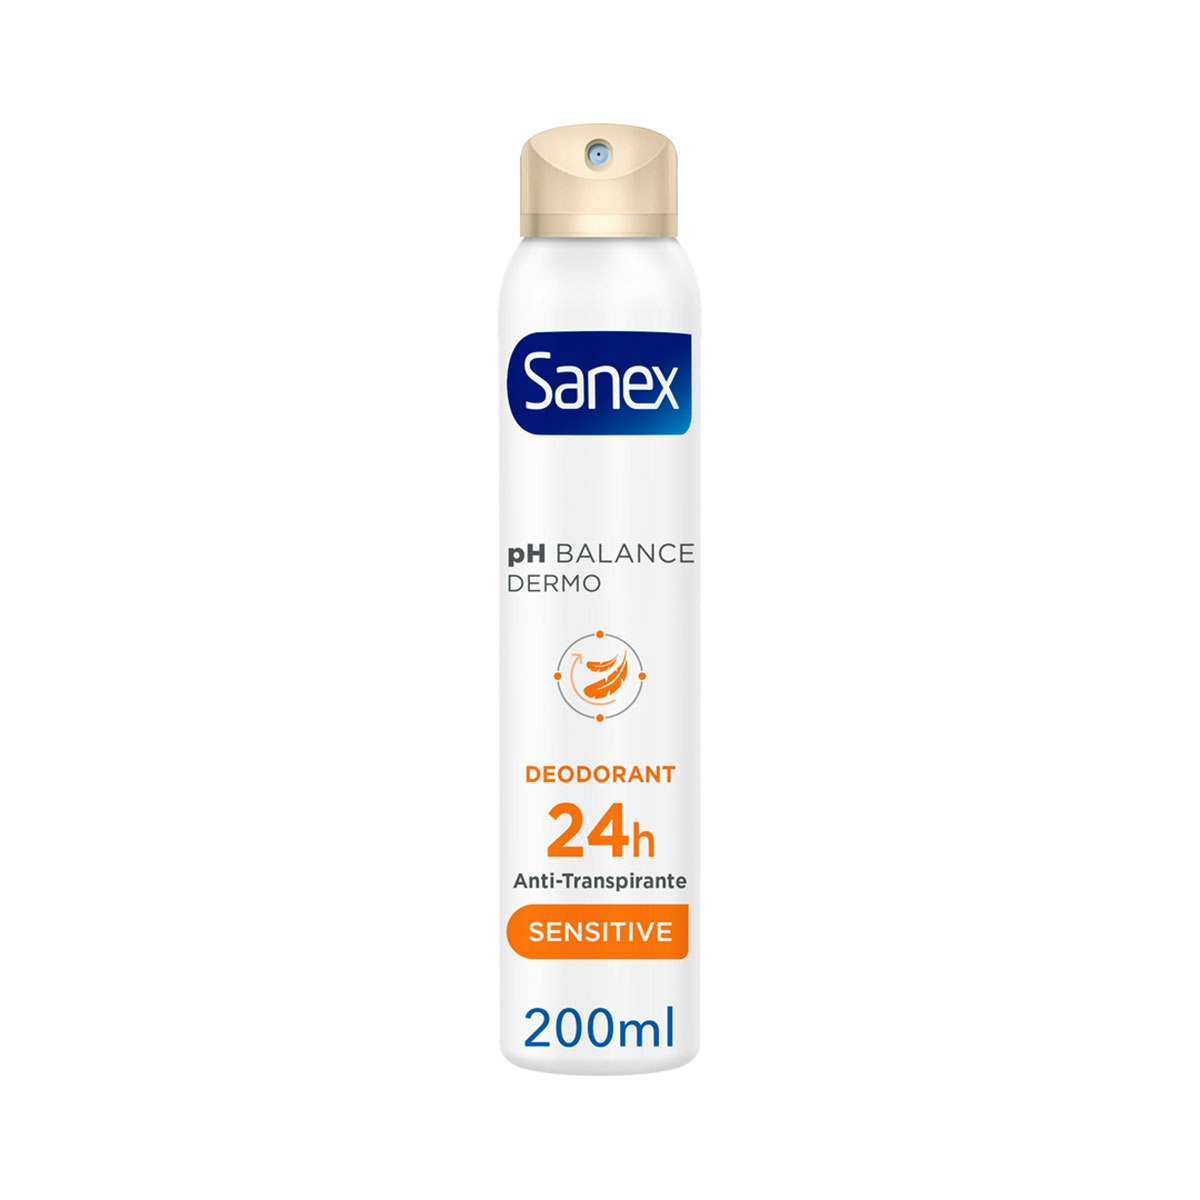 Desodorante spray Sanex pH Balance Dermo Sensitive 48h antitranspirante, piel sensible 50ml